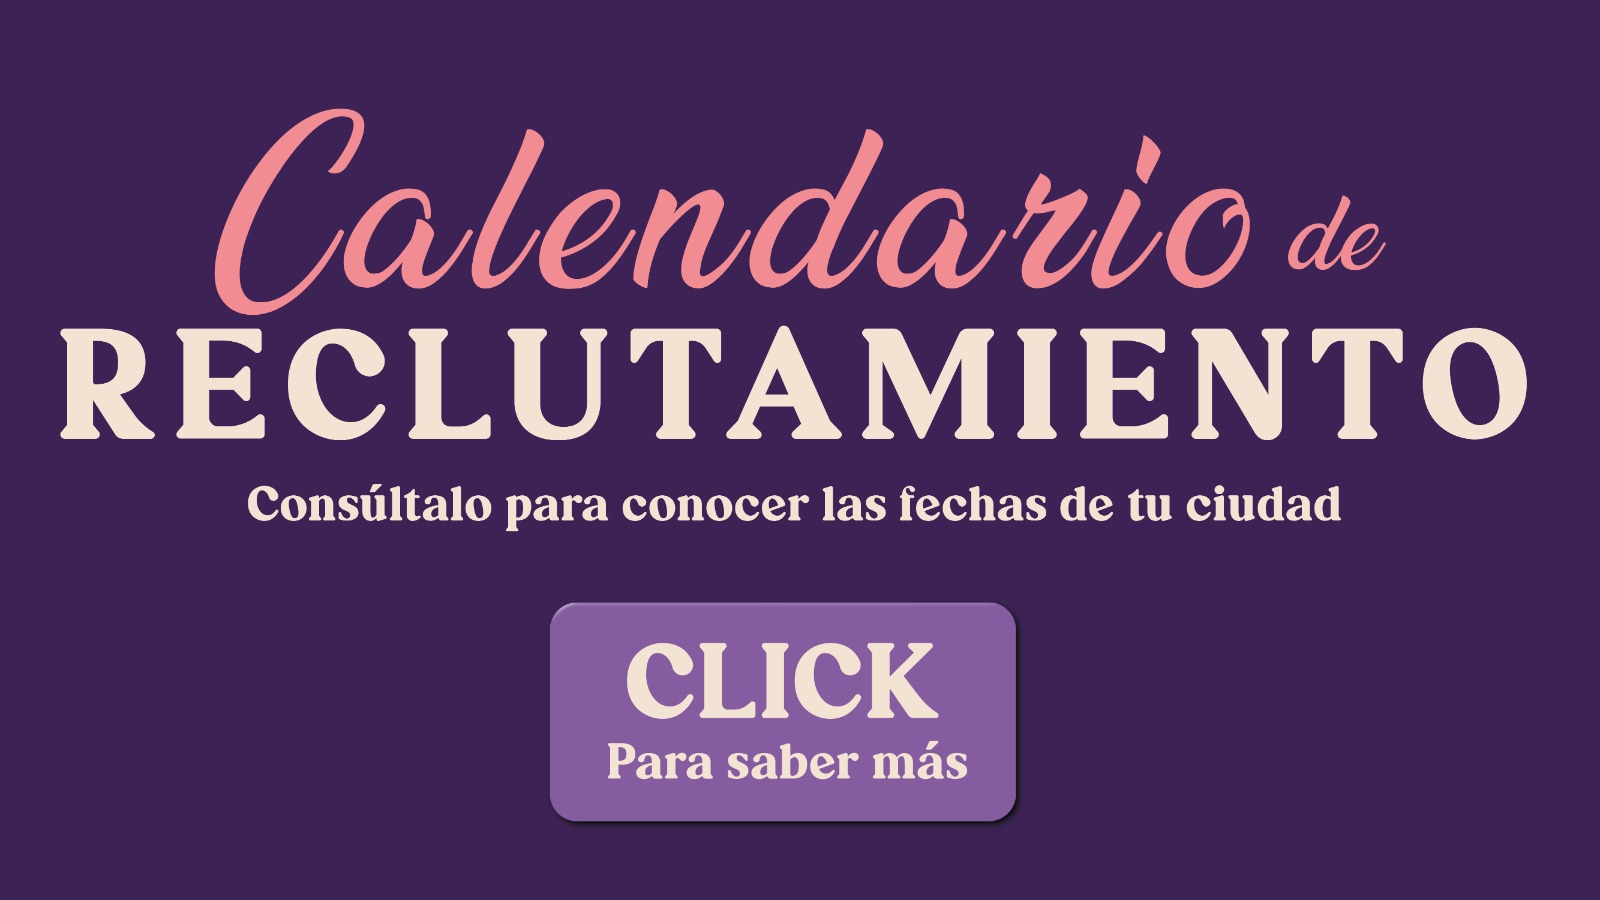 /cms/uploads/image/file/866629/5-6-calendario-reclutamiento.jpeg